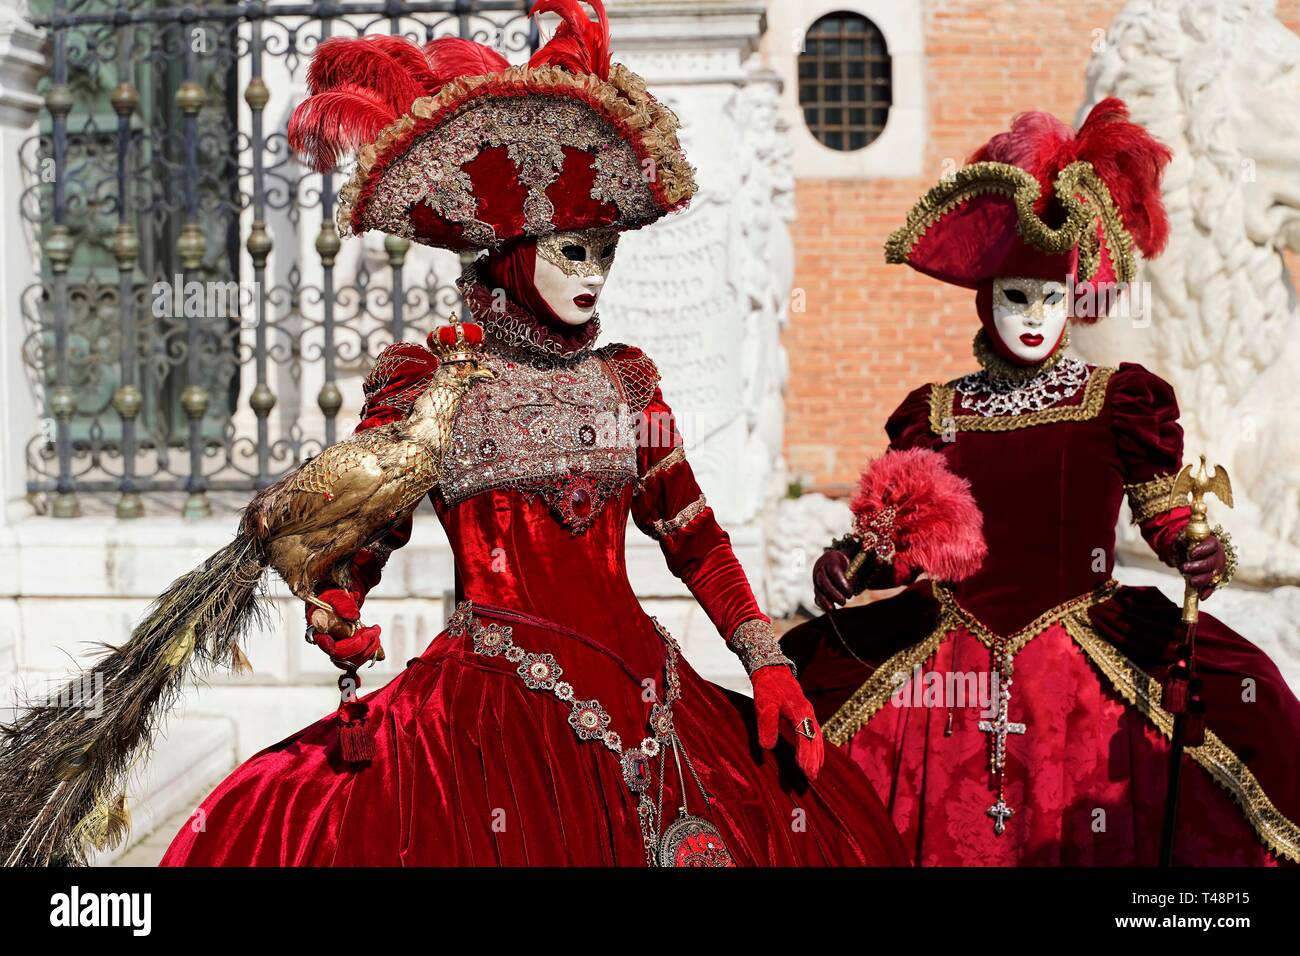 Kostümierte Frauen, traditionelle venezianische Masken, Karneval in  Venedig, Venetien, Italien Stockfotografie - Alamy